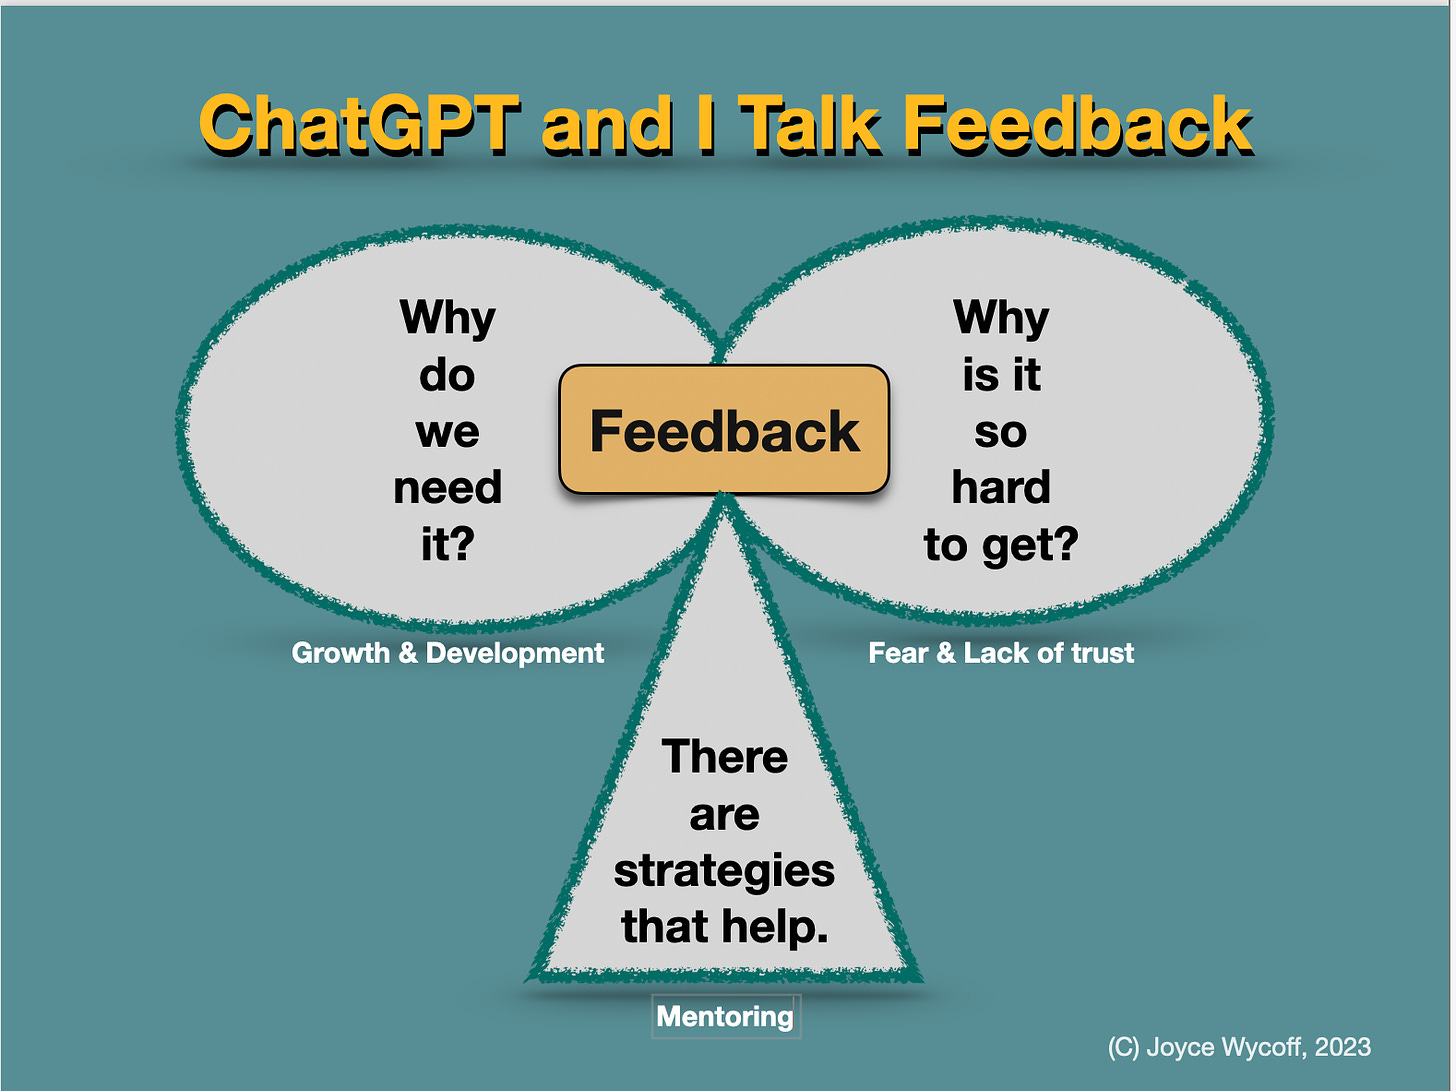 ChatGPT and I Talk Feedback